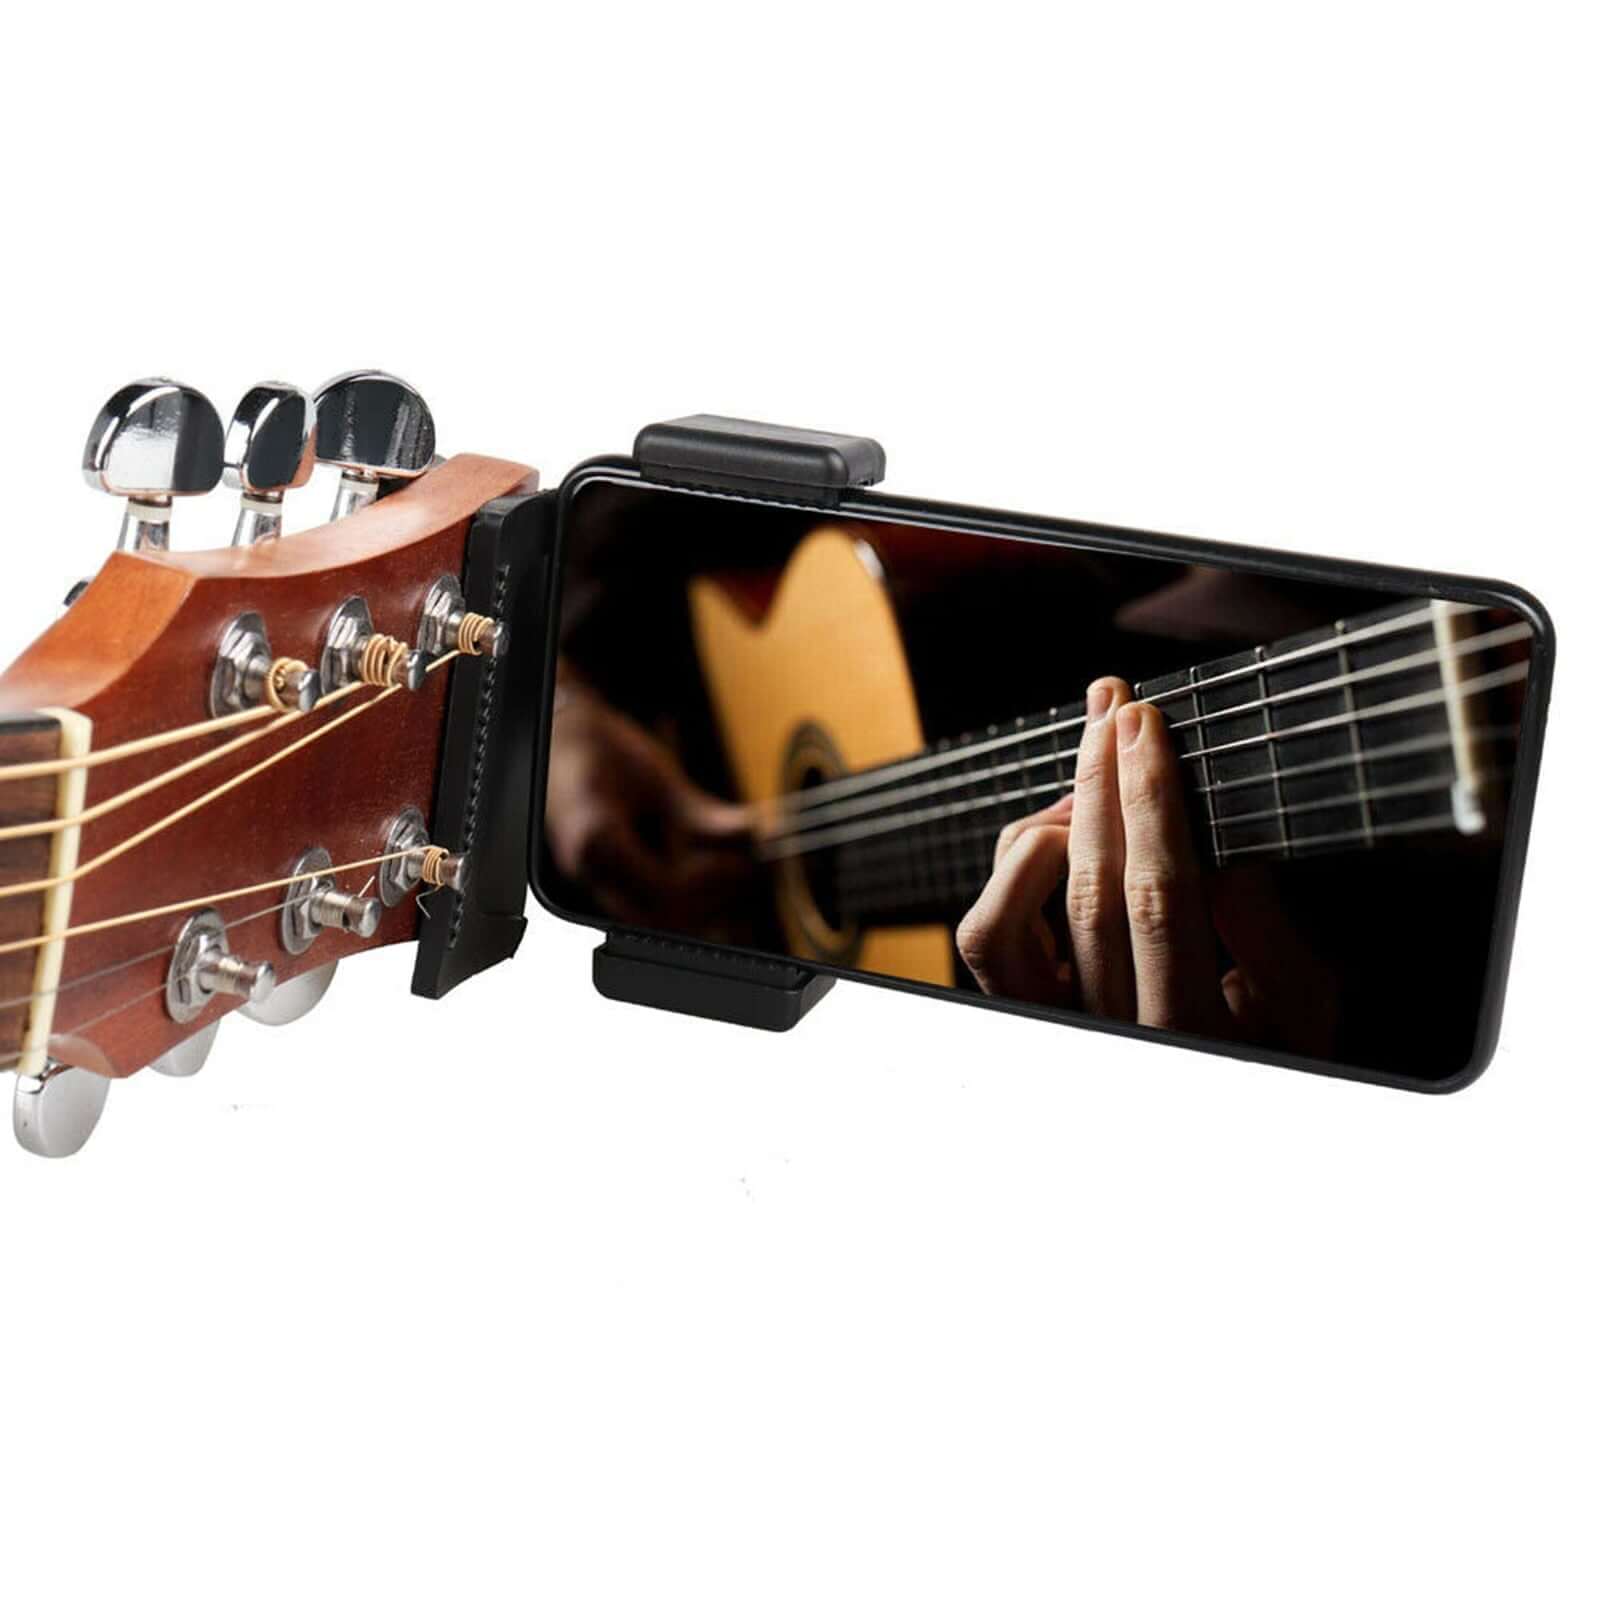 Mobile Bracket Stand Guitar Head Clip Holder guitarmetrics